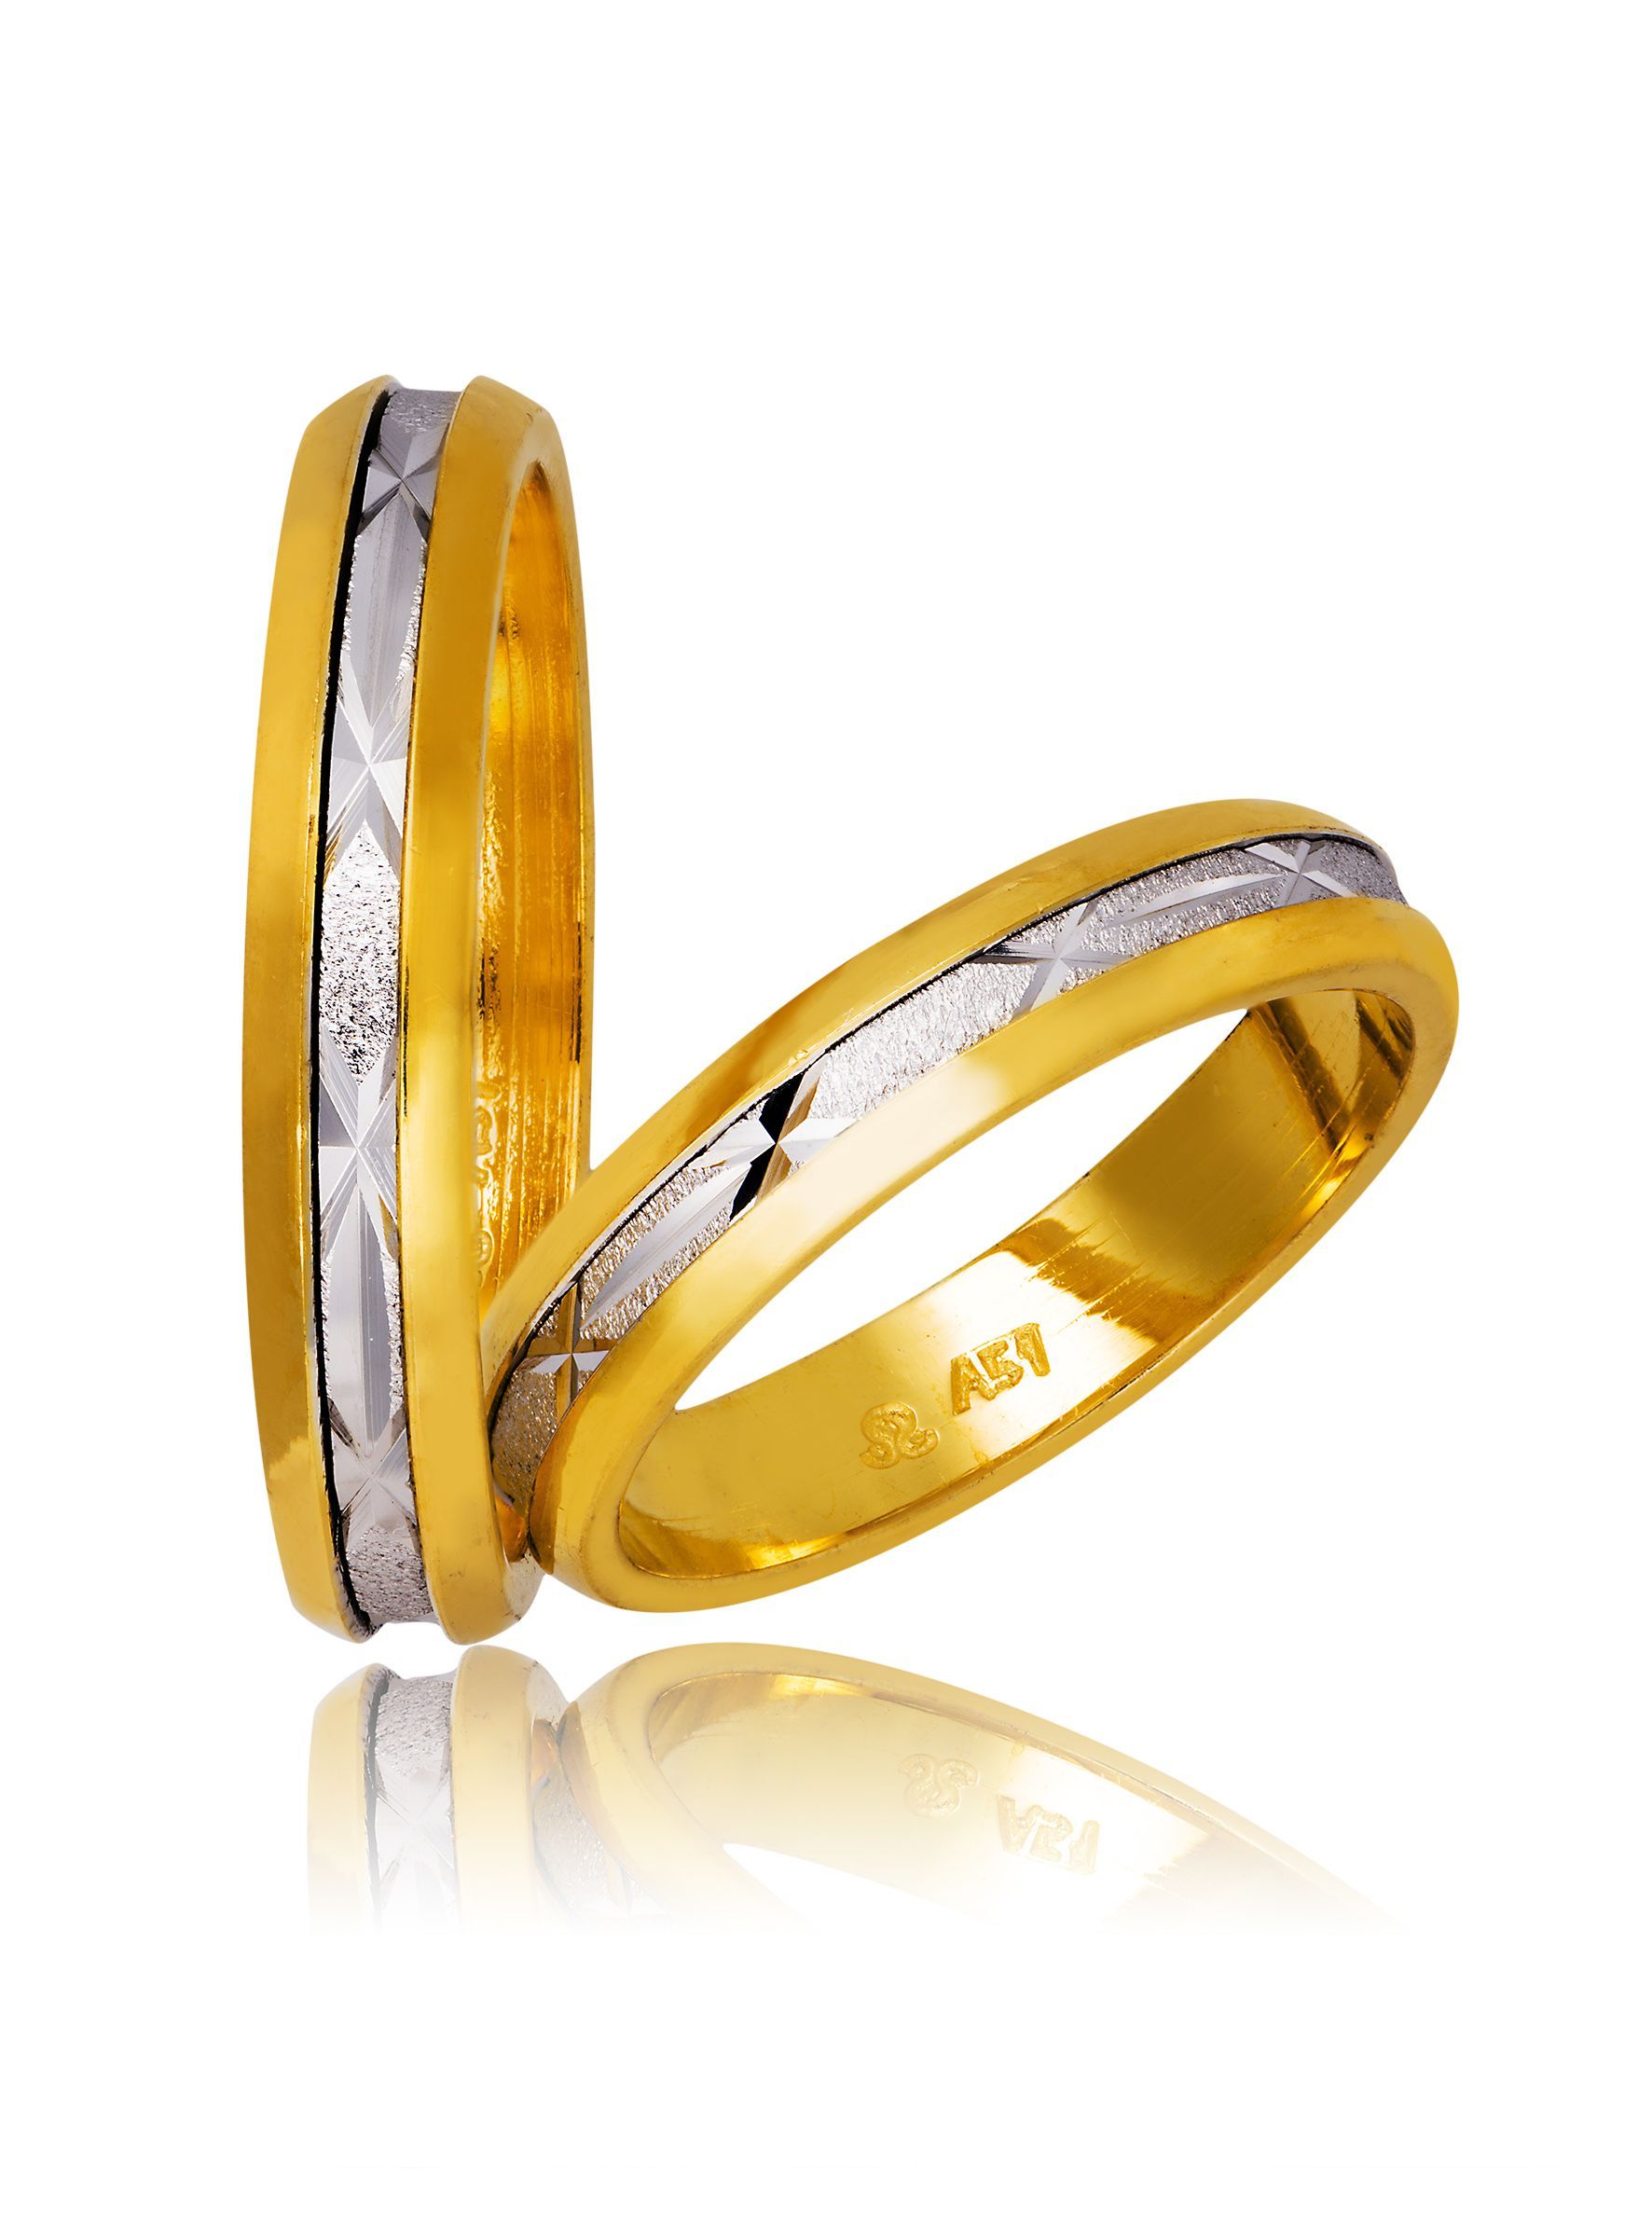 White gold & gold wedding rings 4.3mm (code 721)